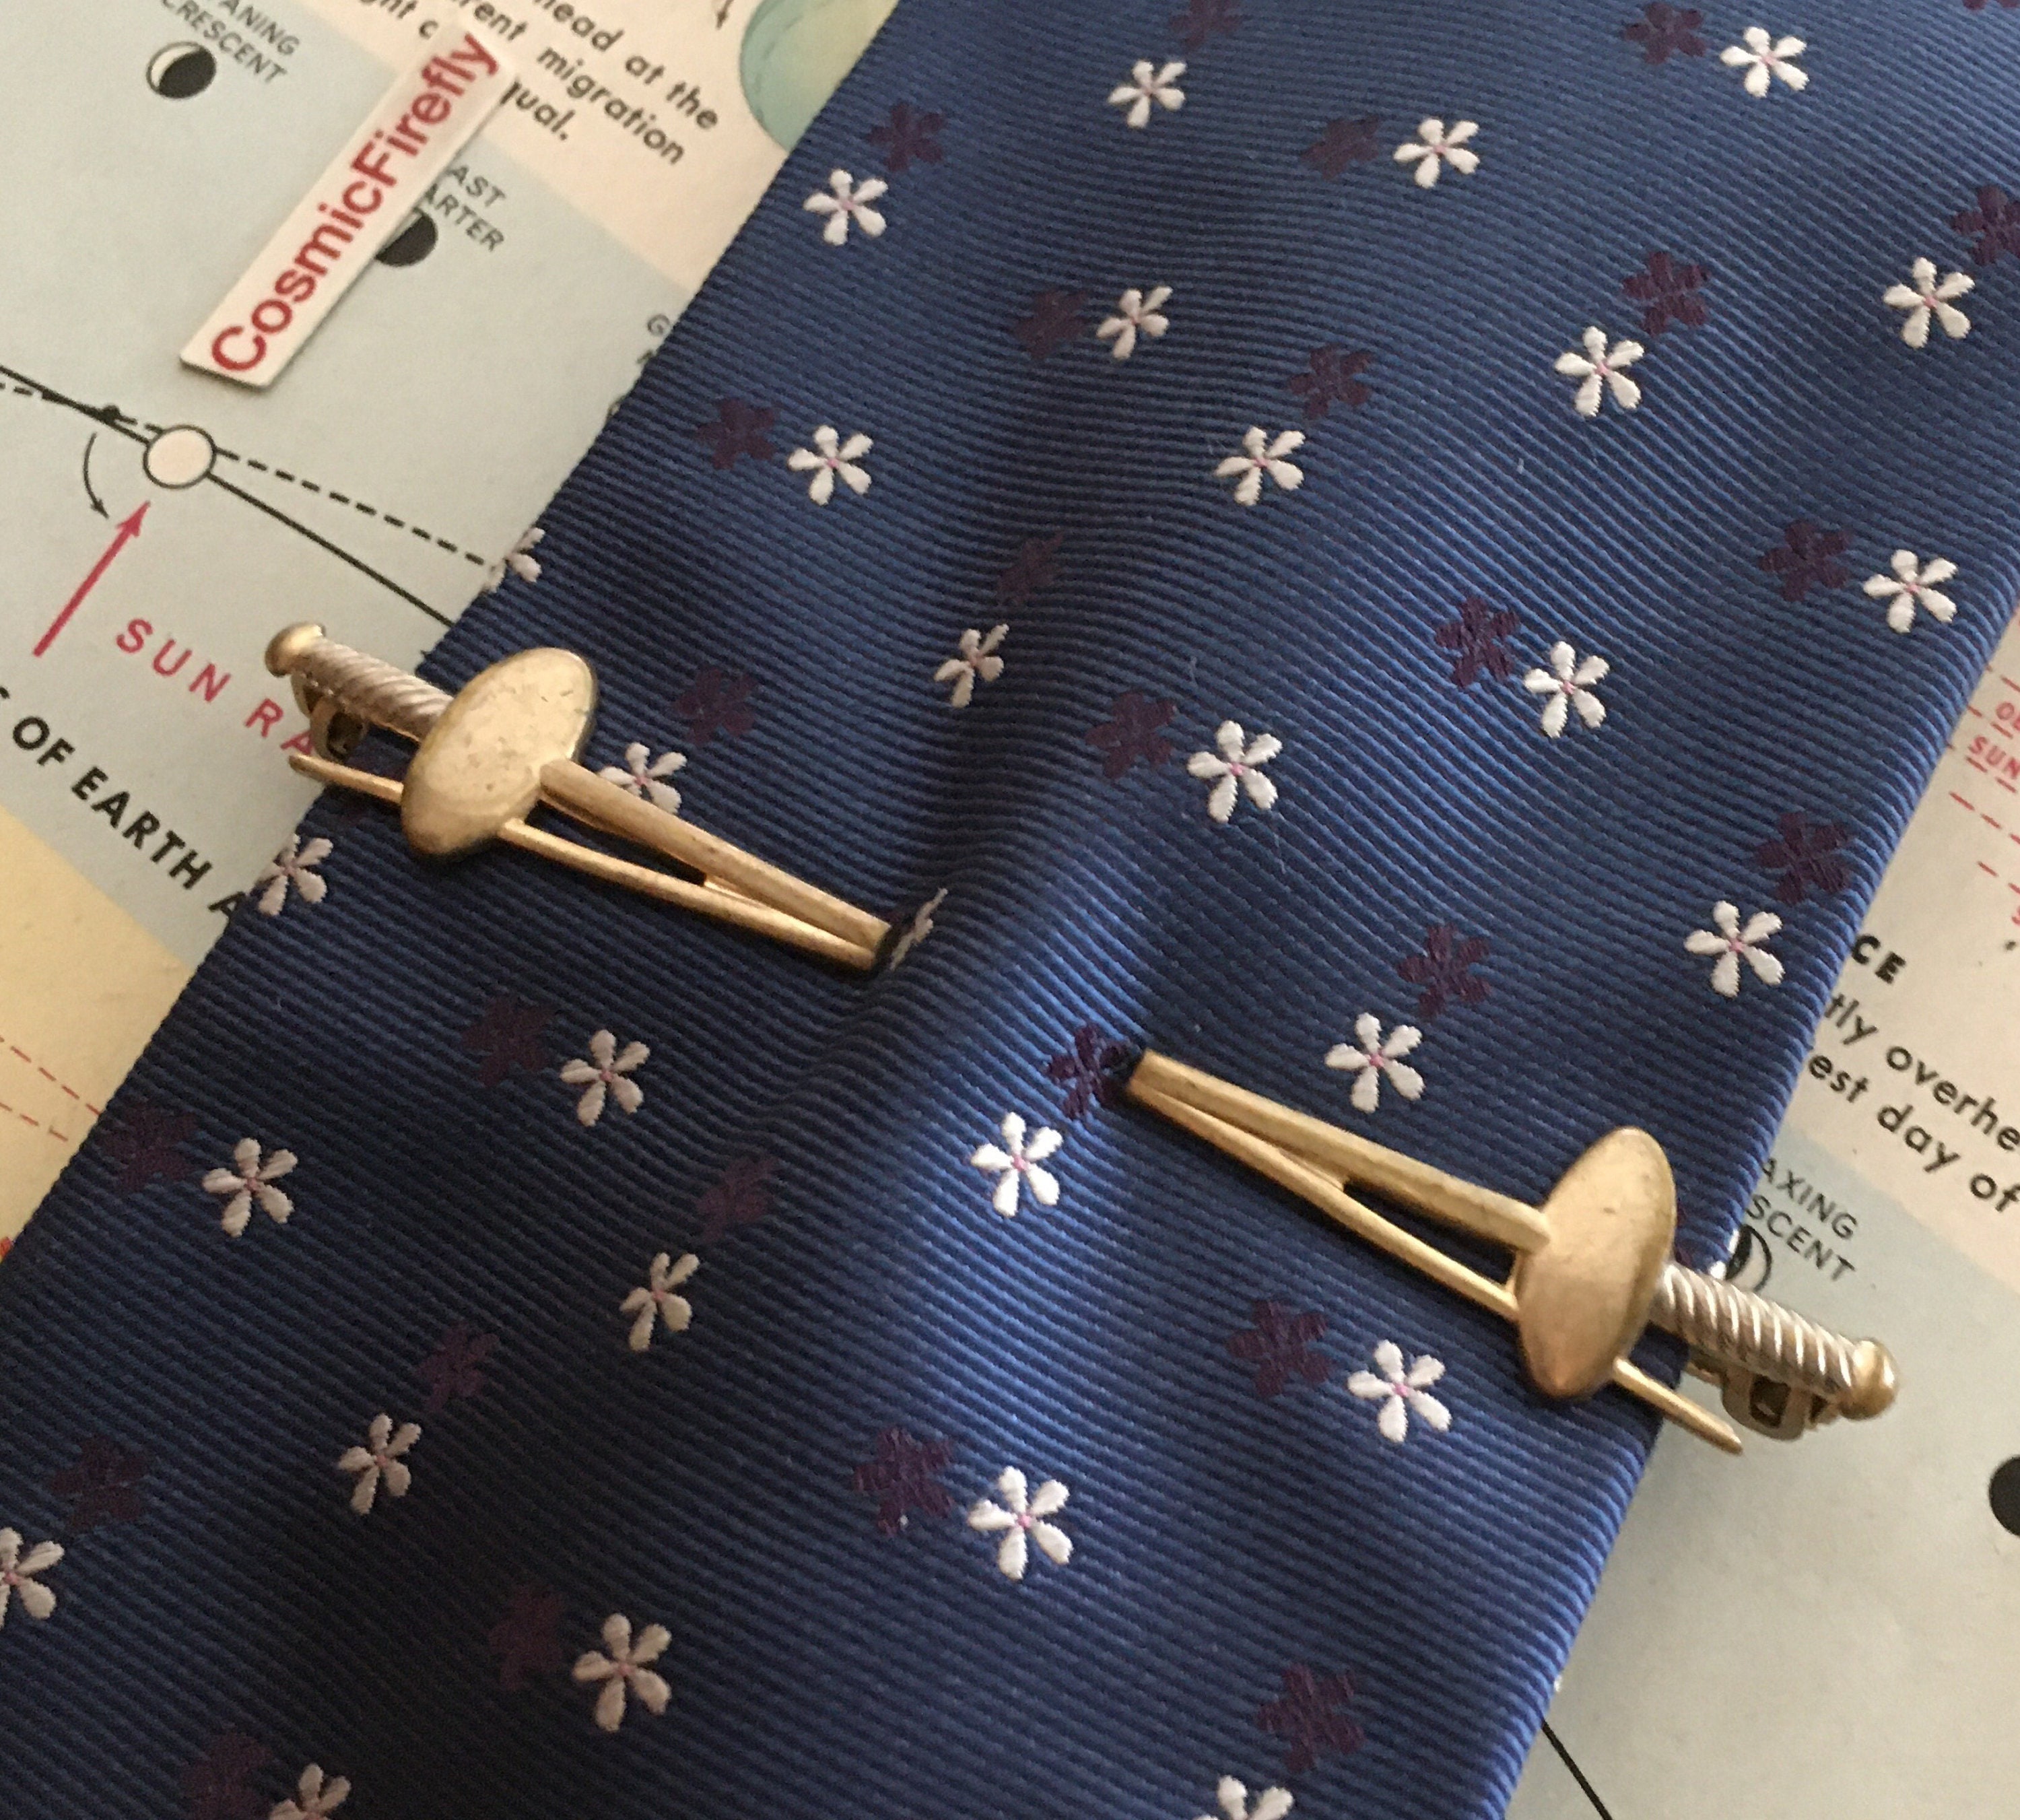 1940s Tie Bar Hinged Pierced Look Gold Tone Chain Design 